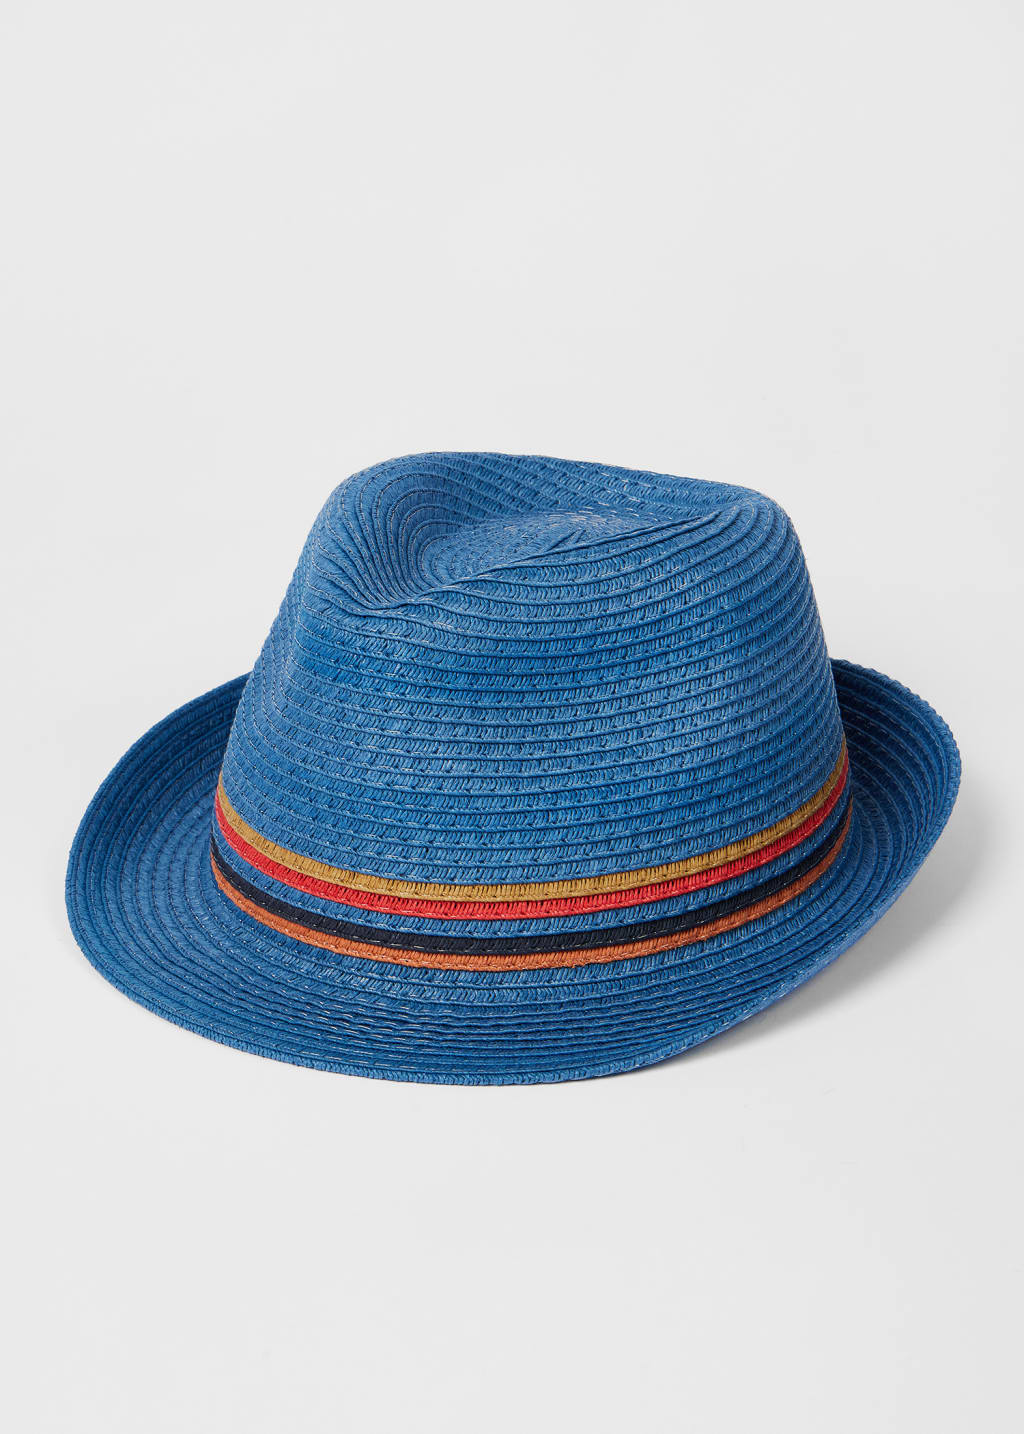 Front View - Blue 'Artist Stripe' Trilby Hat Paul Smith